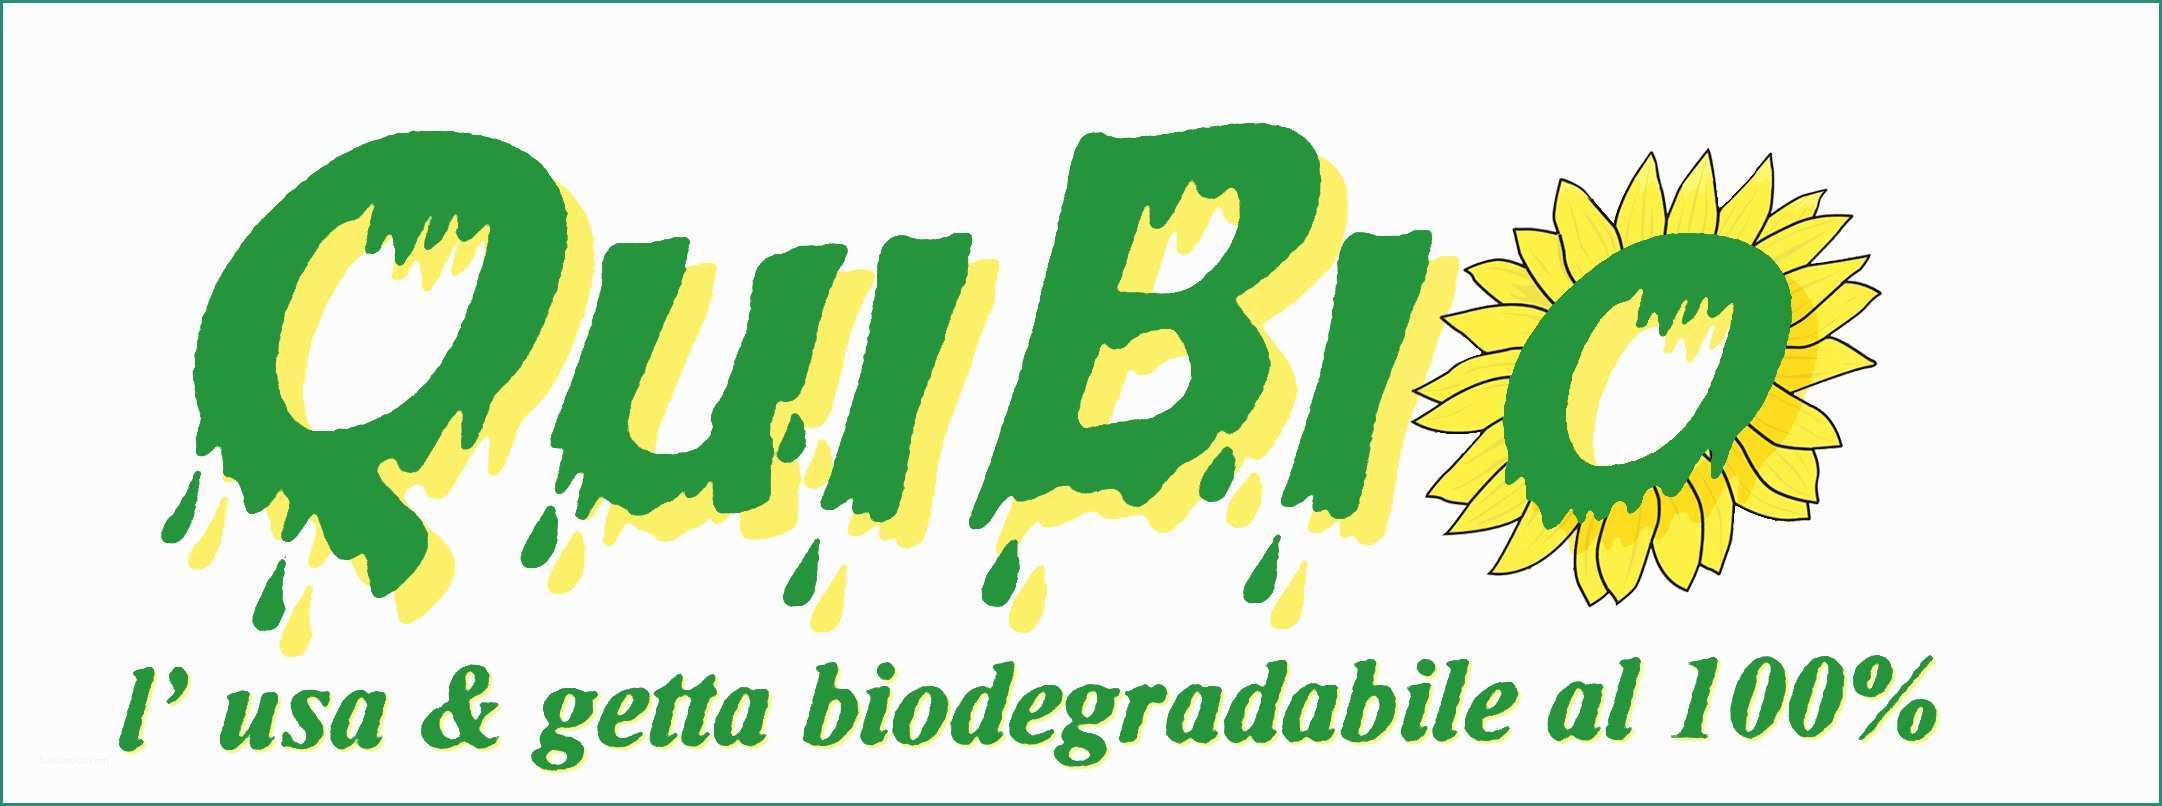 Esselunga Viaggi Sardegna E Bio Usa E Getta Biodegradabile E Postabile Al